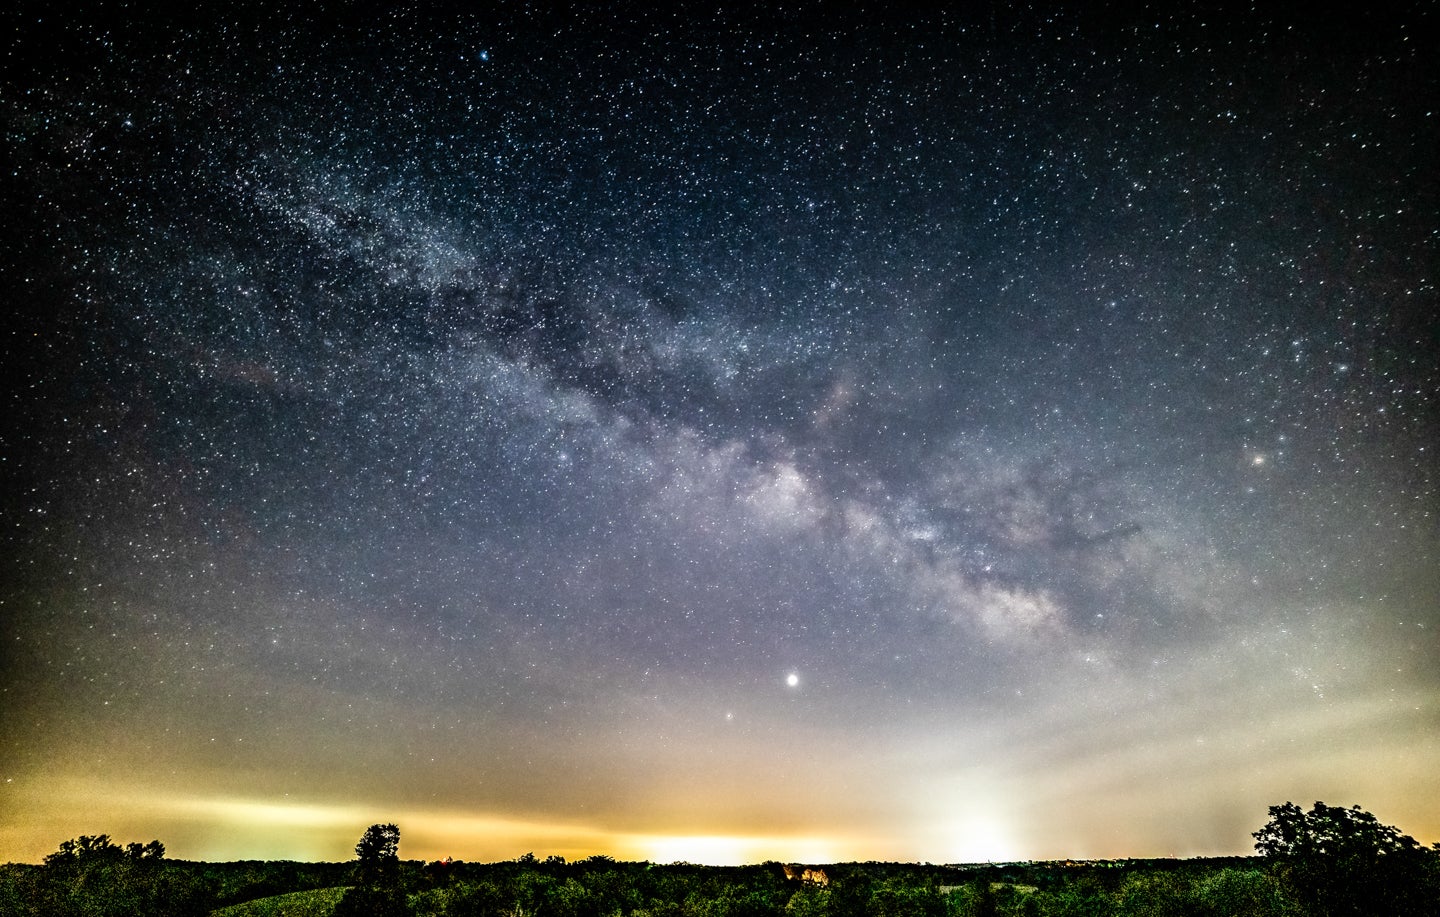 Capture the night: Local photographer turns his lens toward the evening sky